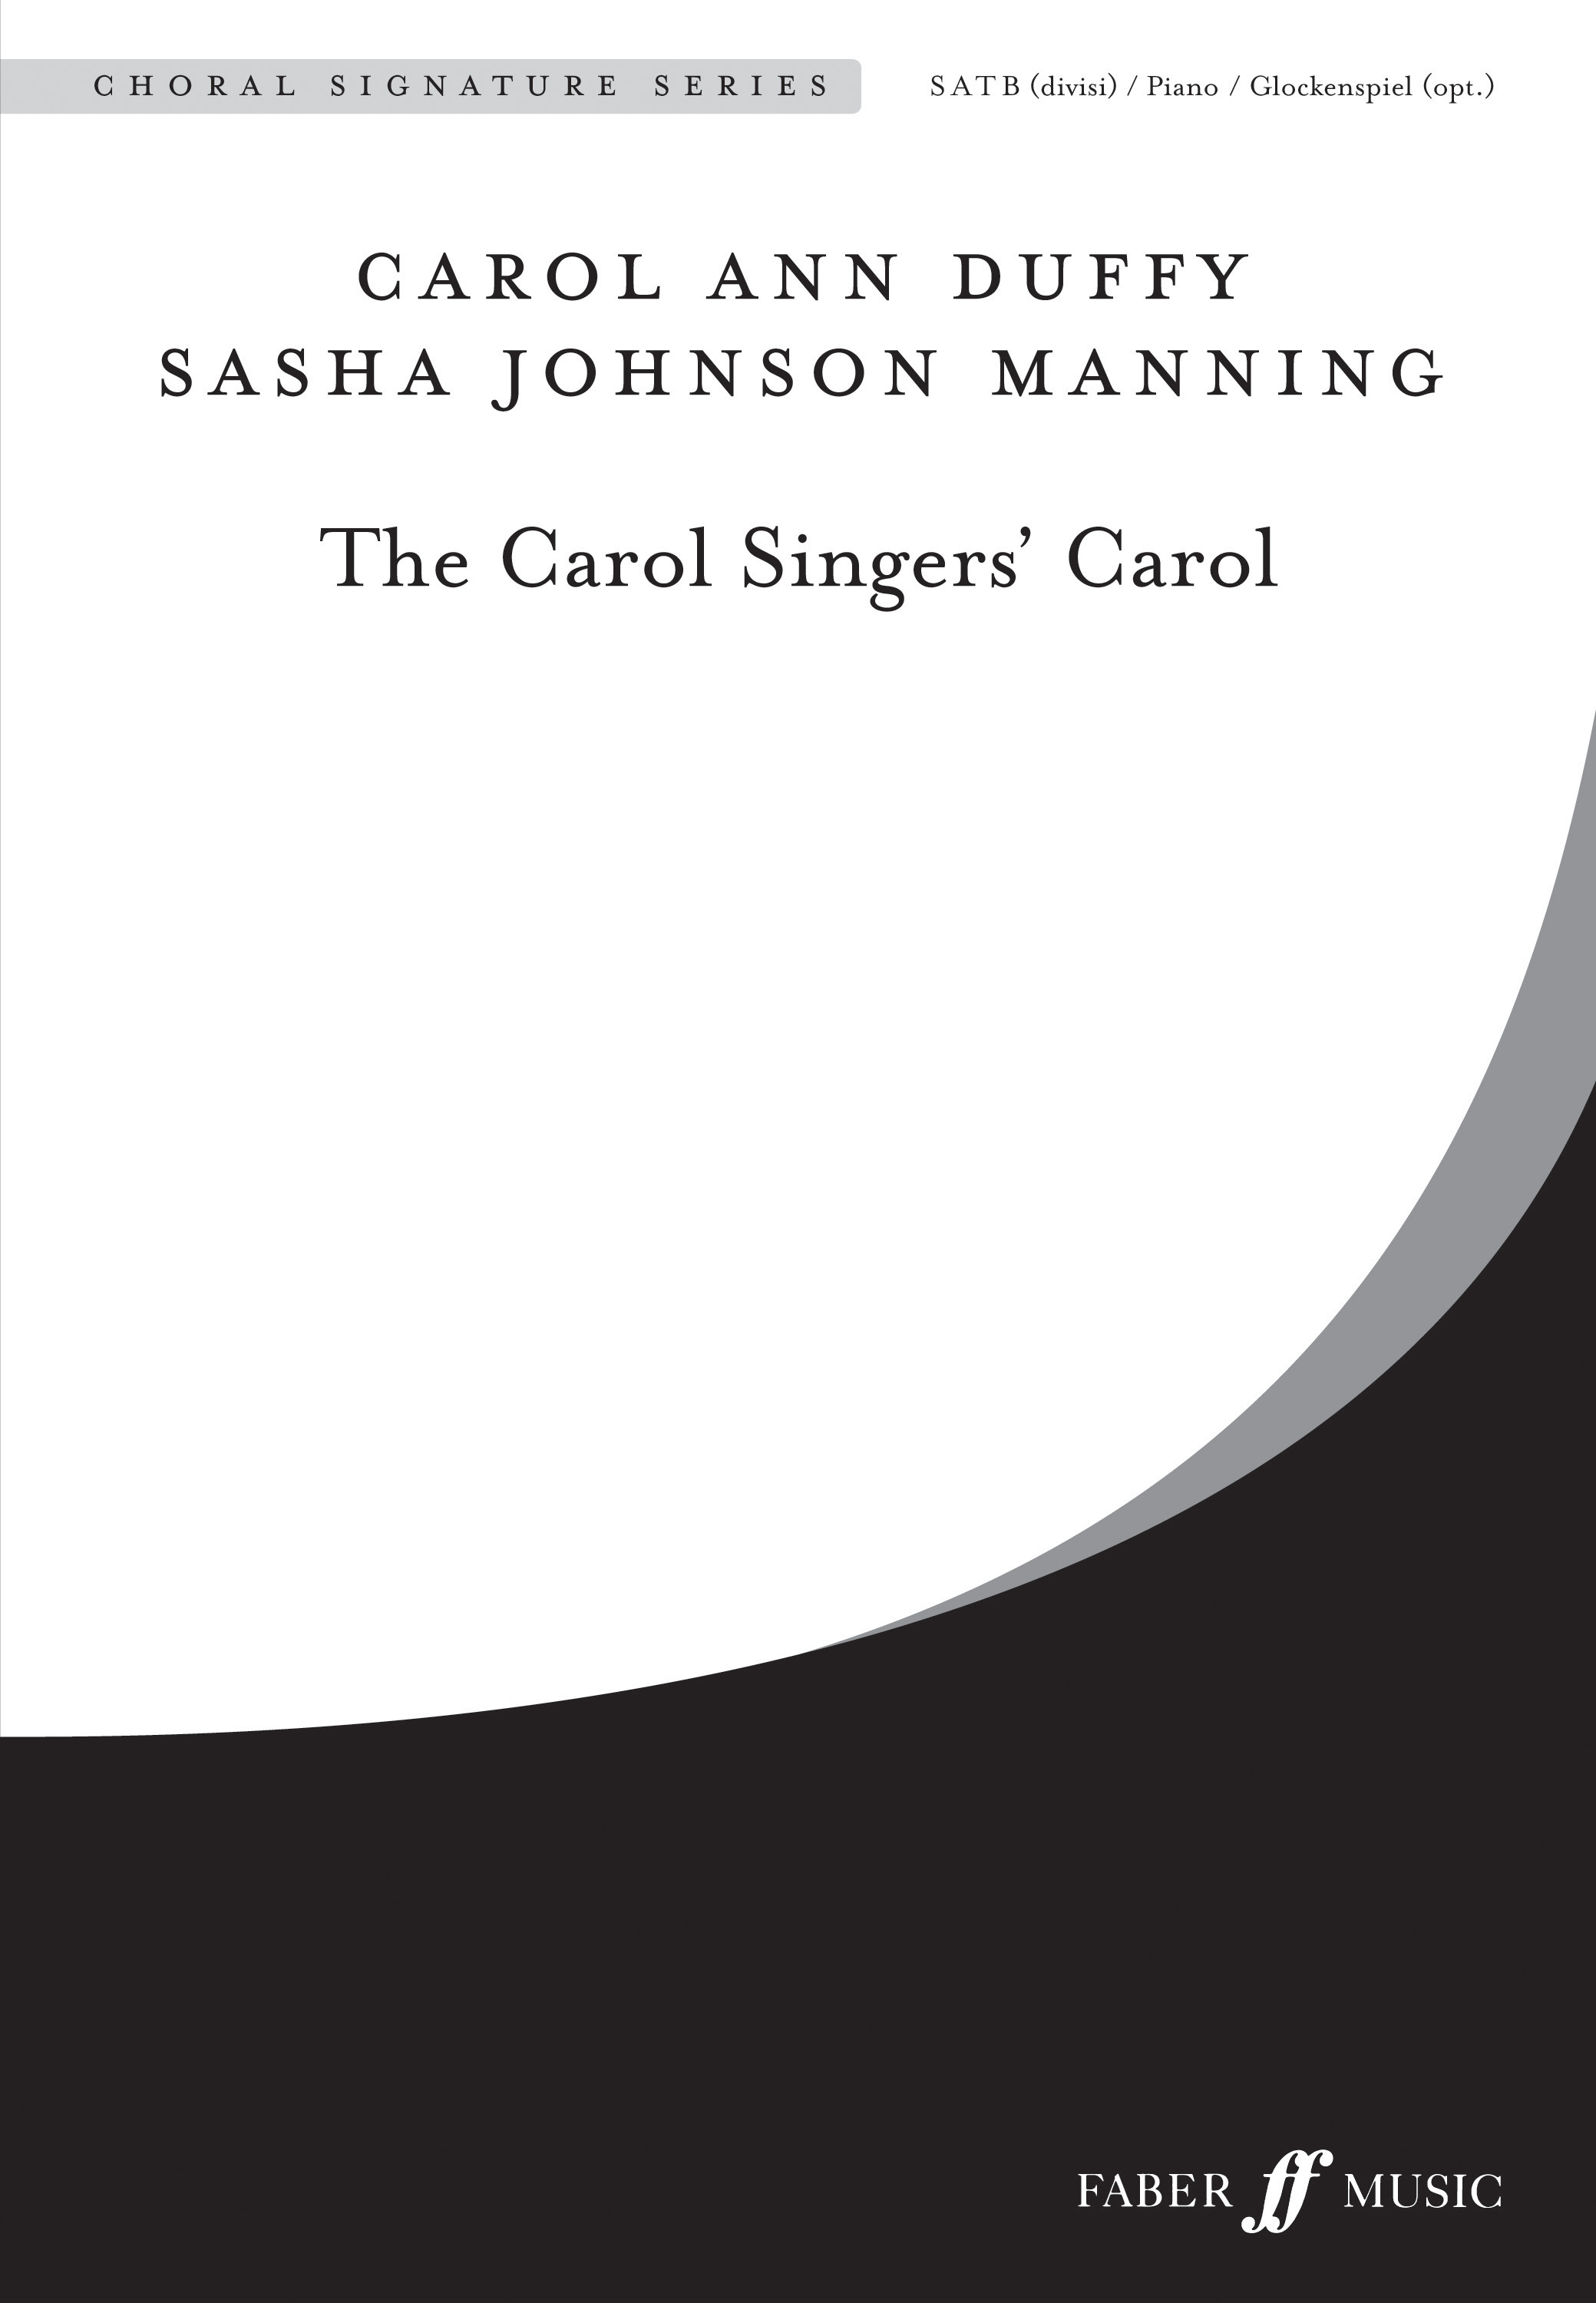 C. Duffy S. Manning: The Carol singer's carol: SATB: Vocal Score